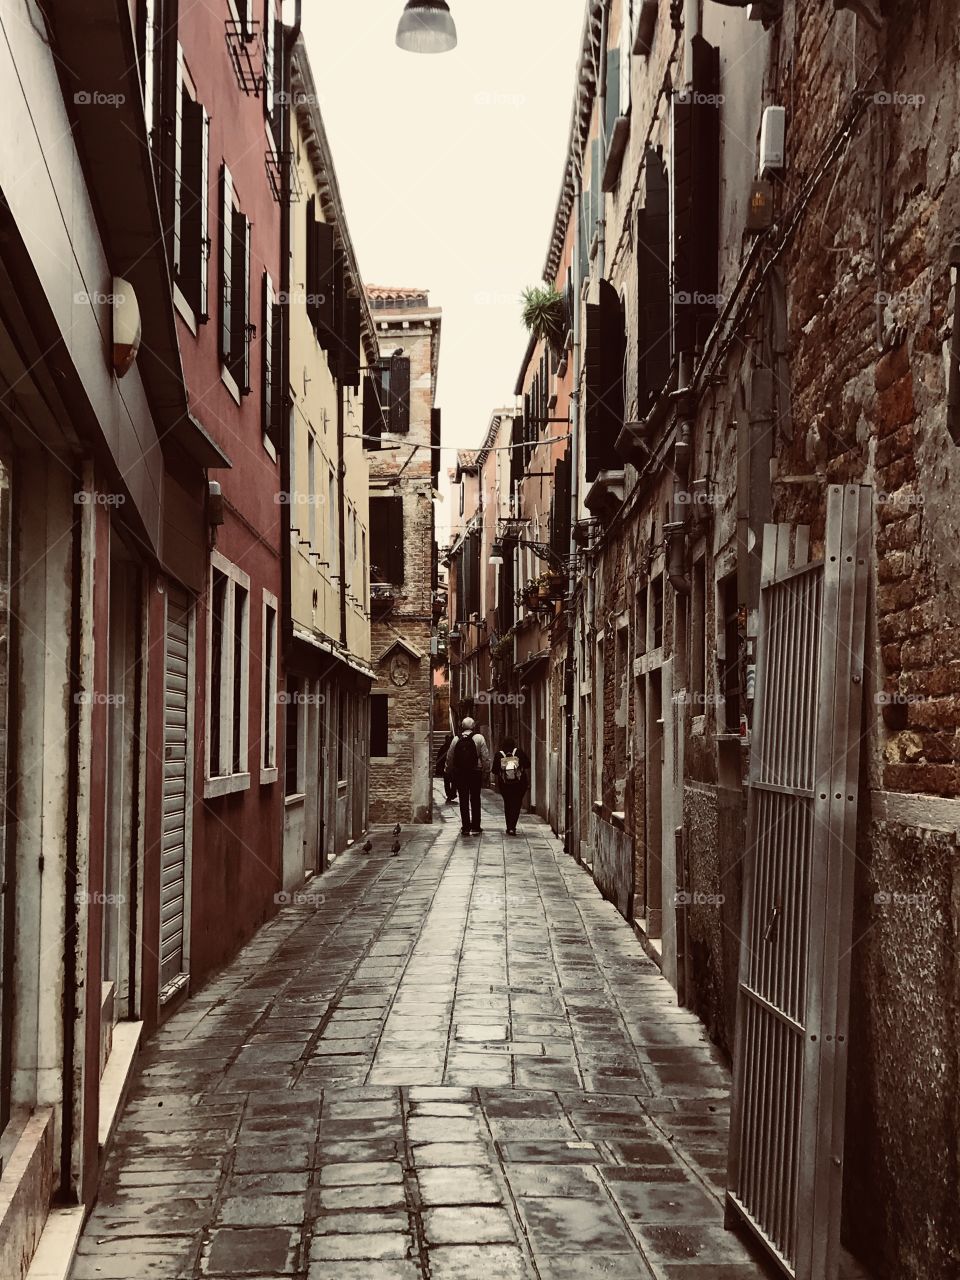 Exploring Venice 